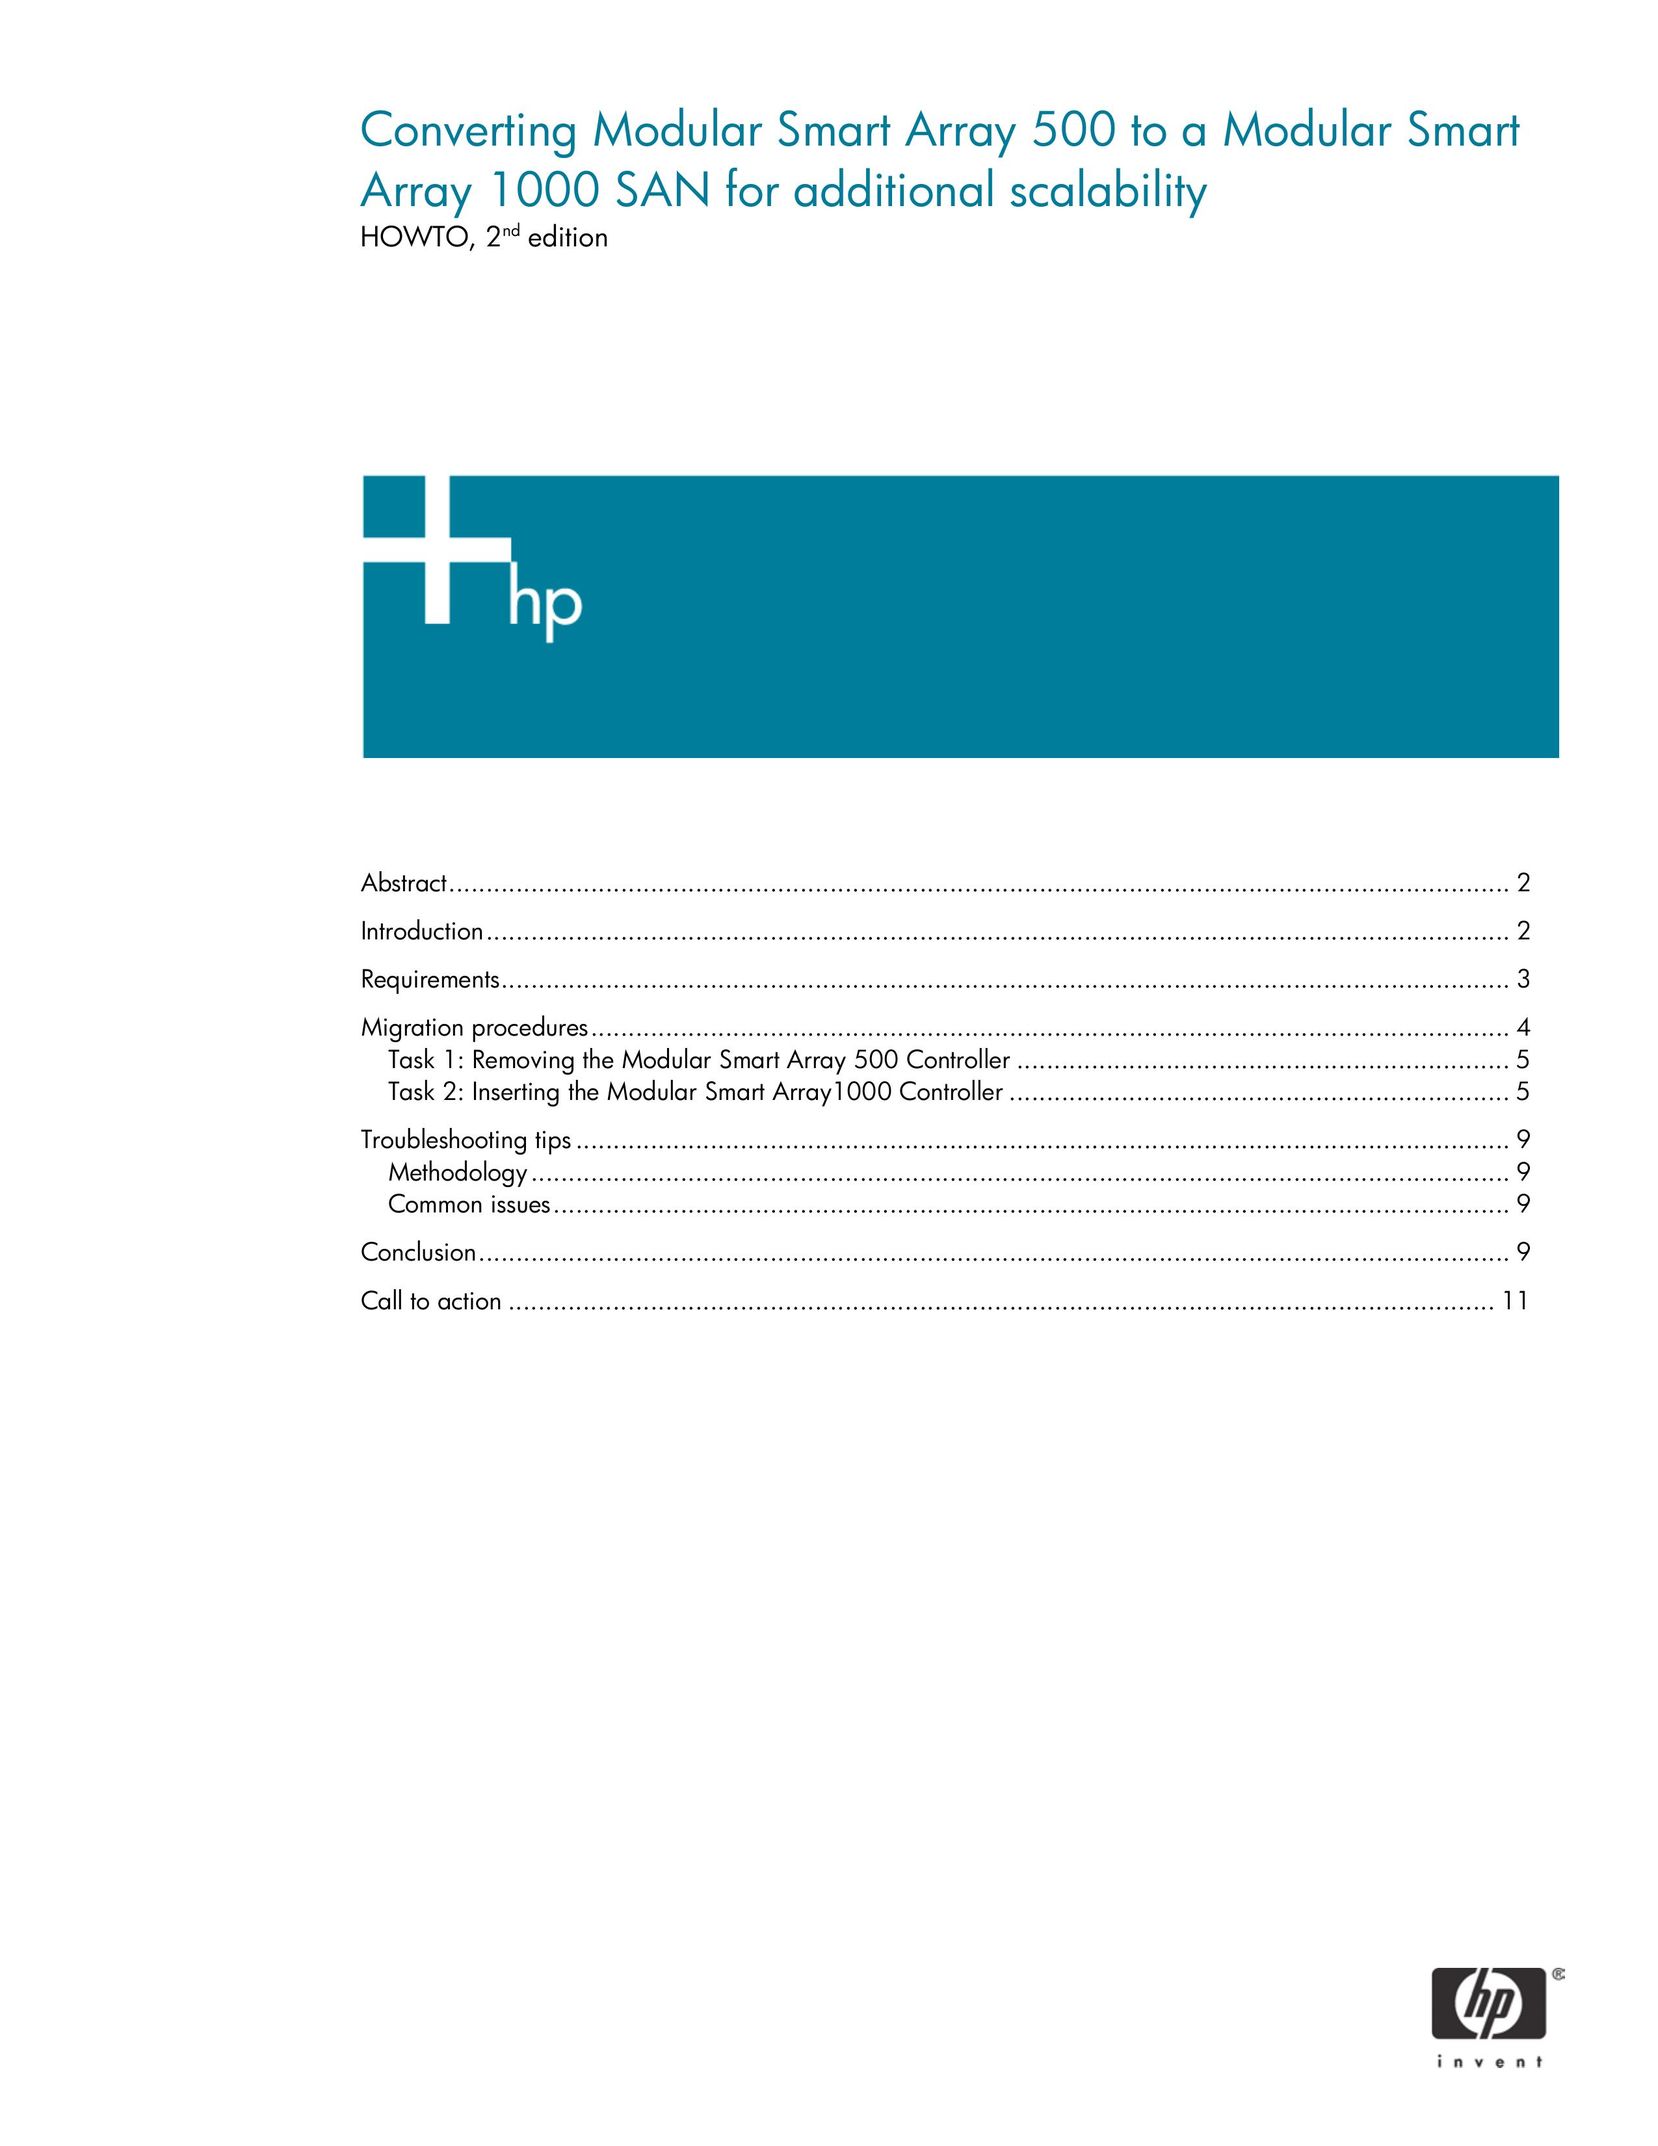 HP (Hewlett-Packard) HOWTO Network Hardware User Manual